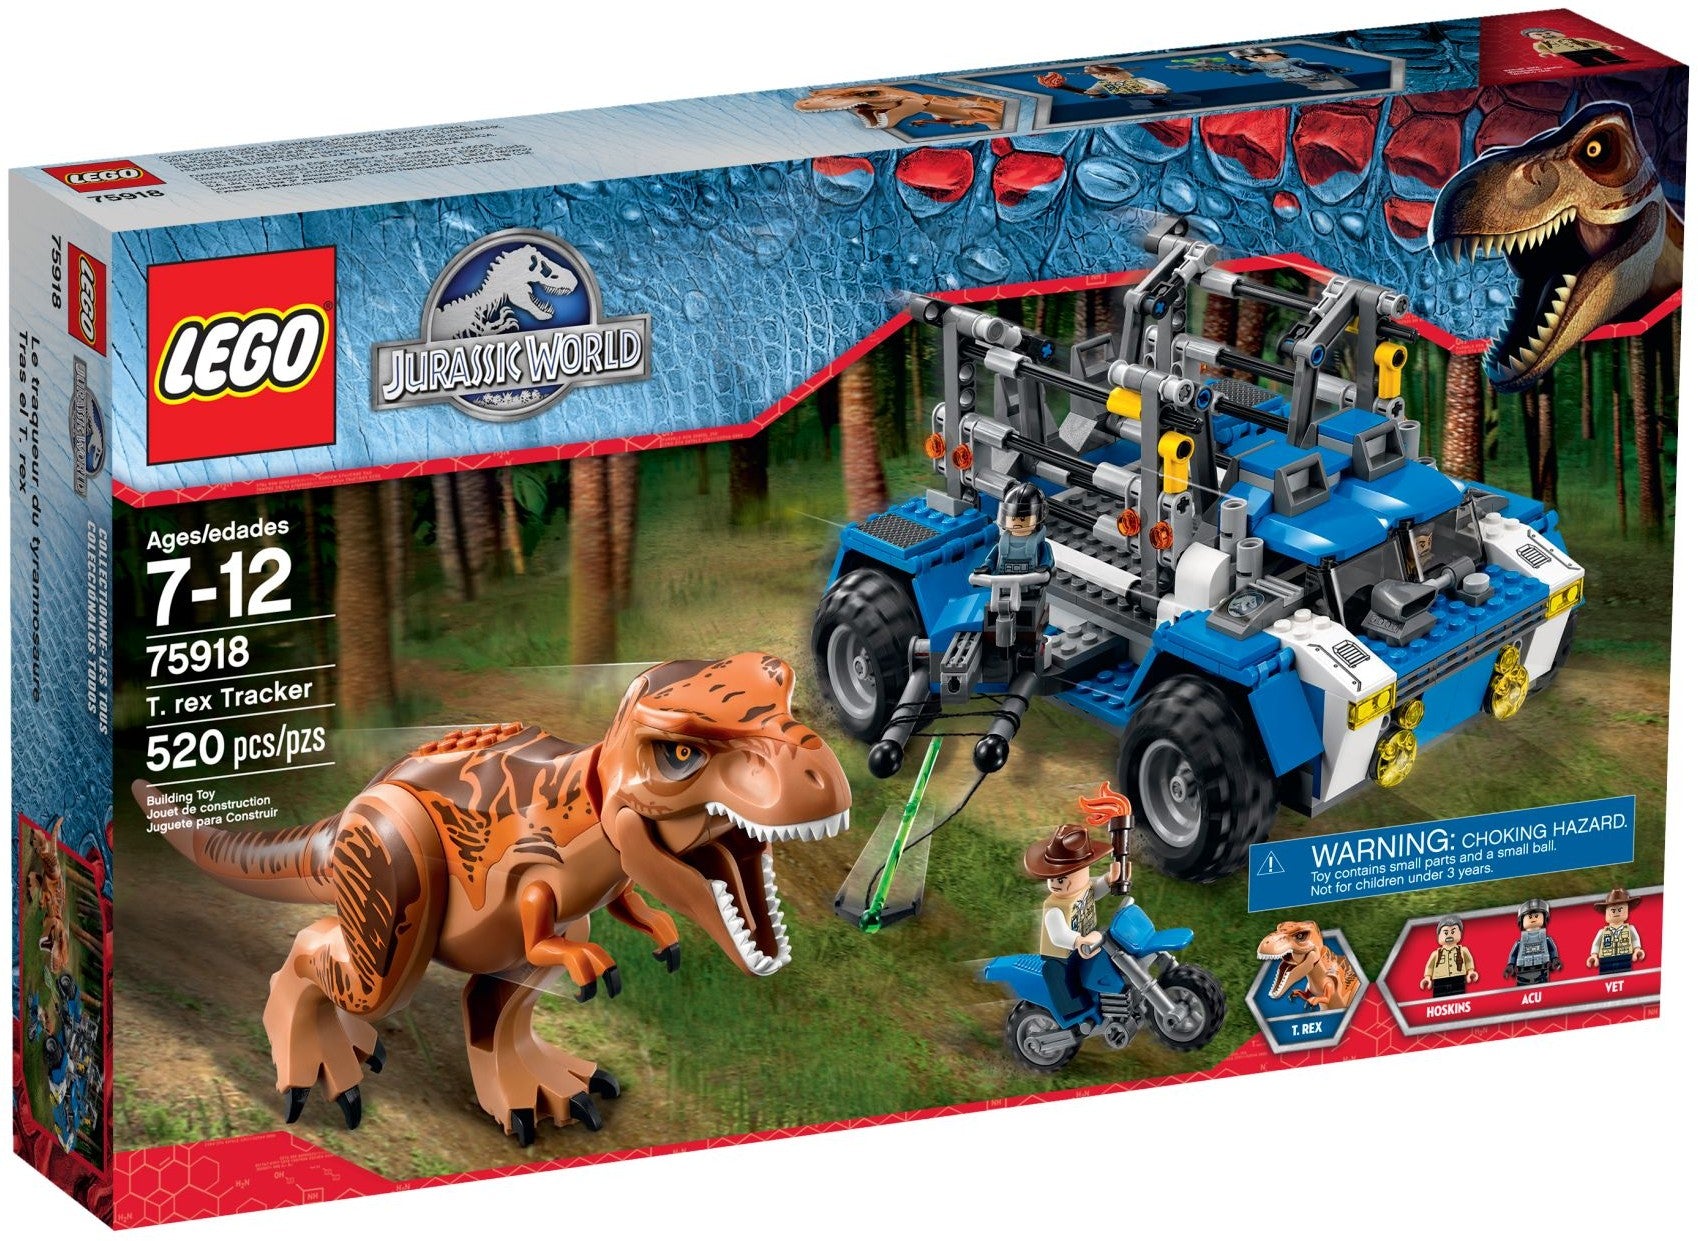 Lego Jurassic Park 75918 - T. rex Tracker